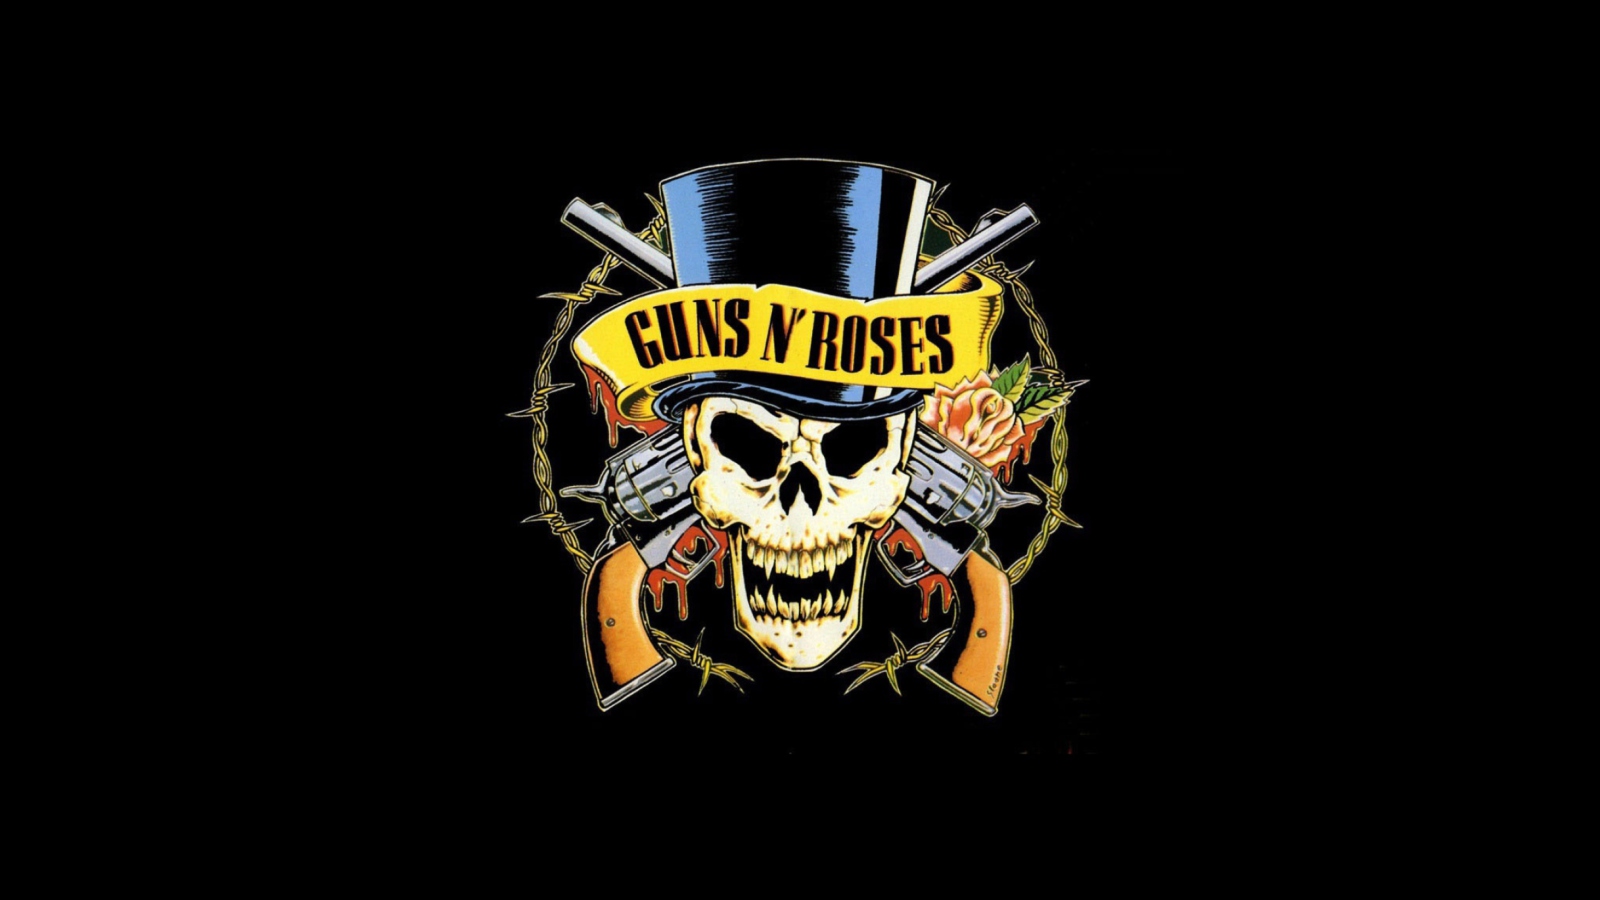 Guns'n'roses Logo wallpaper 1600x900